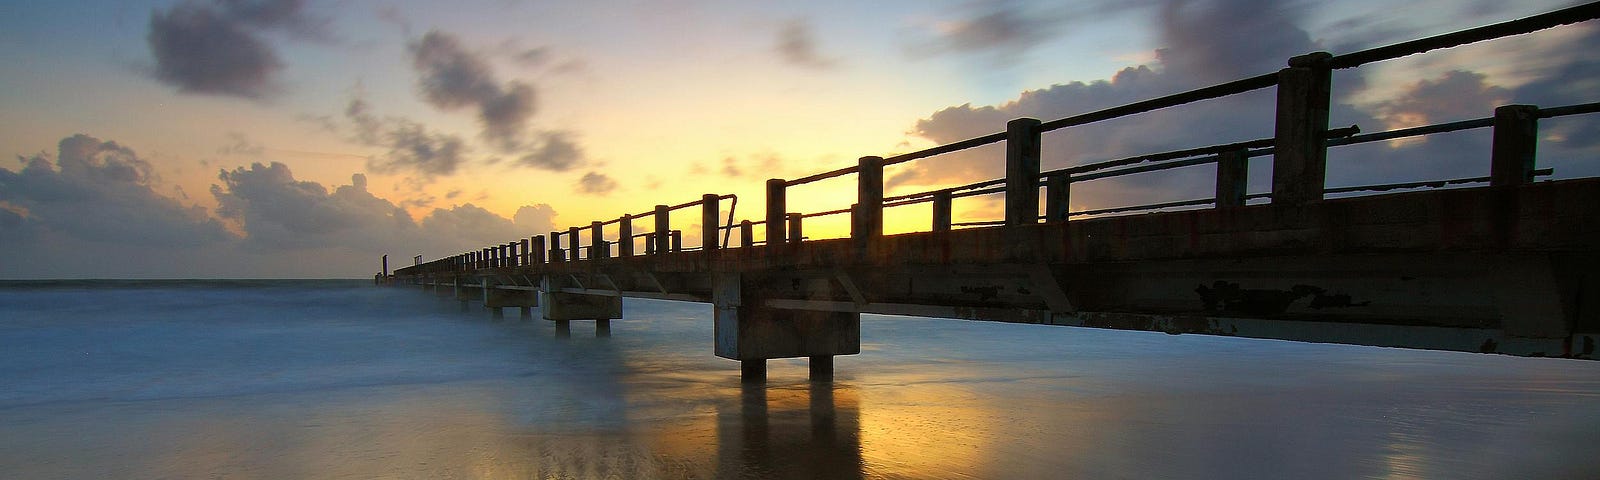 bridge stretching into the sunrise above a calm lake